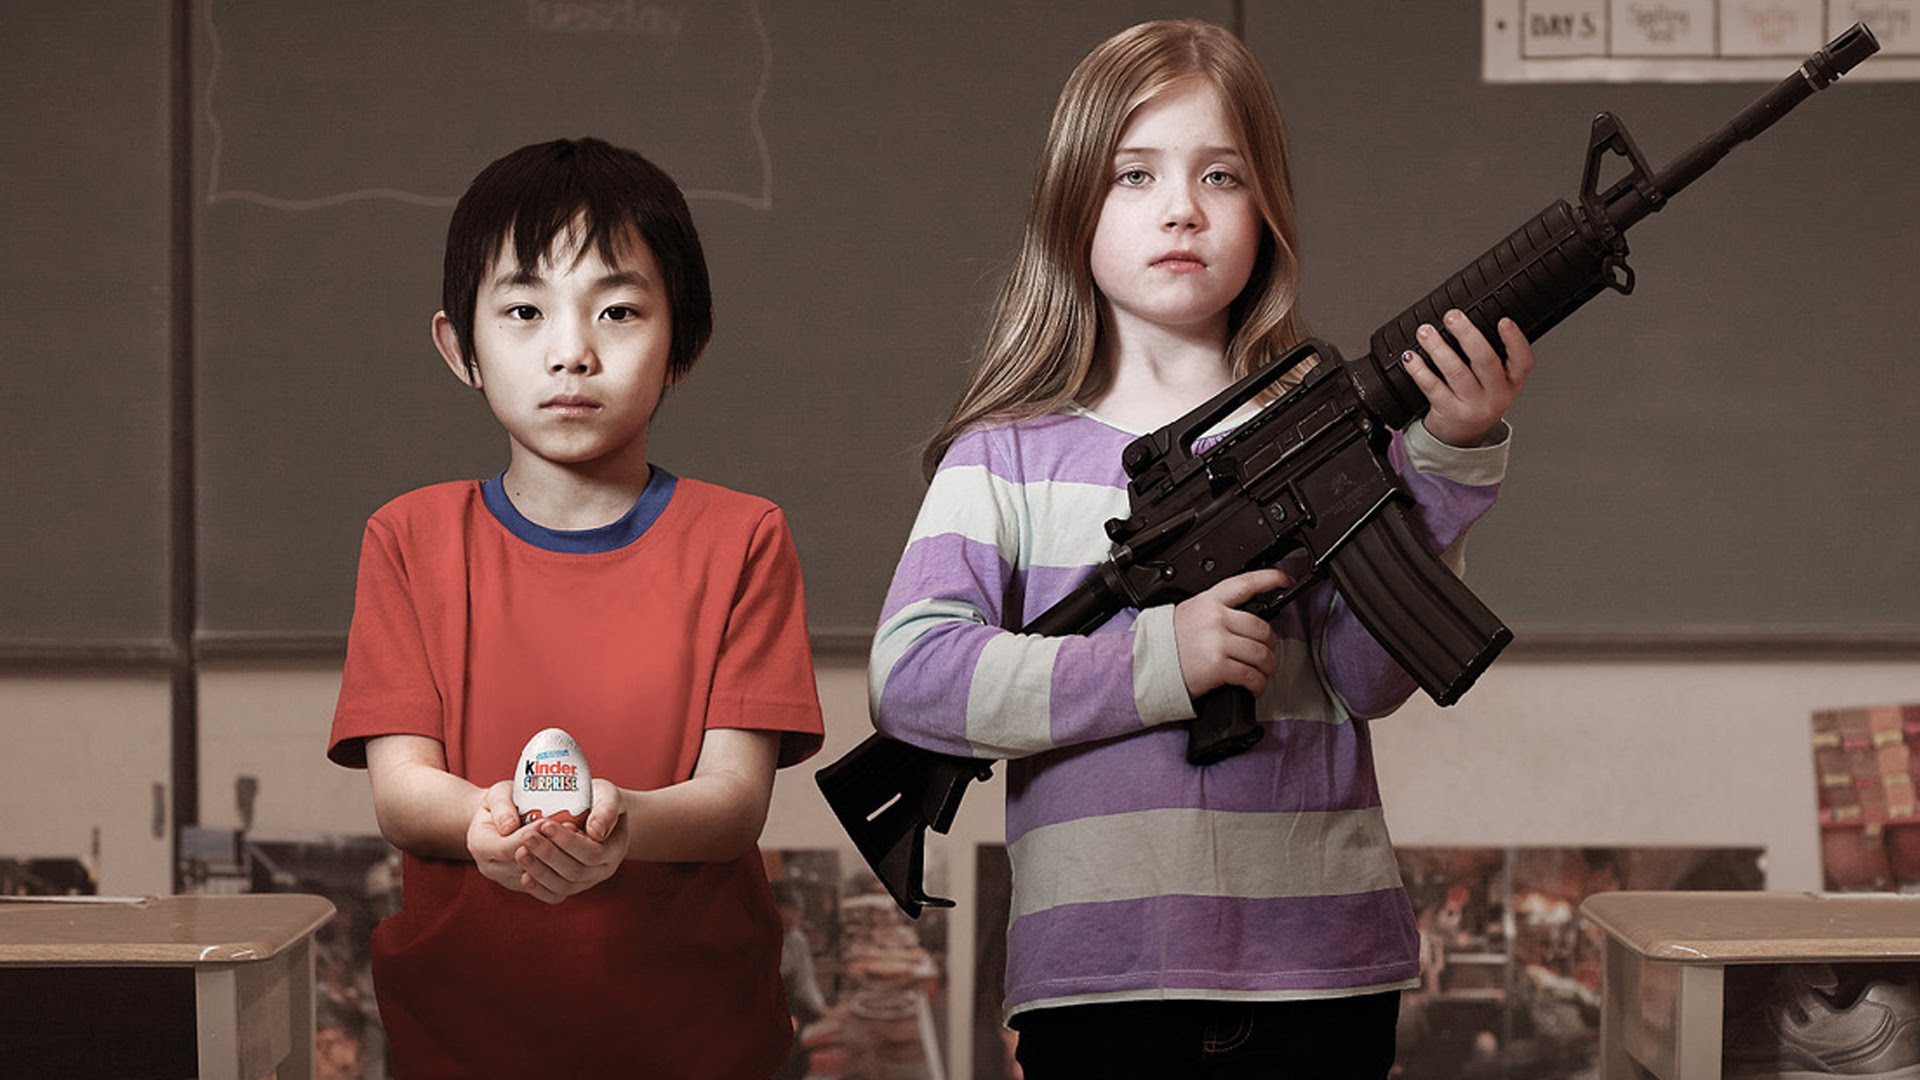 Documentaire Kill zone USA (2/2) Etats-Unis, la loi des armes